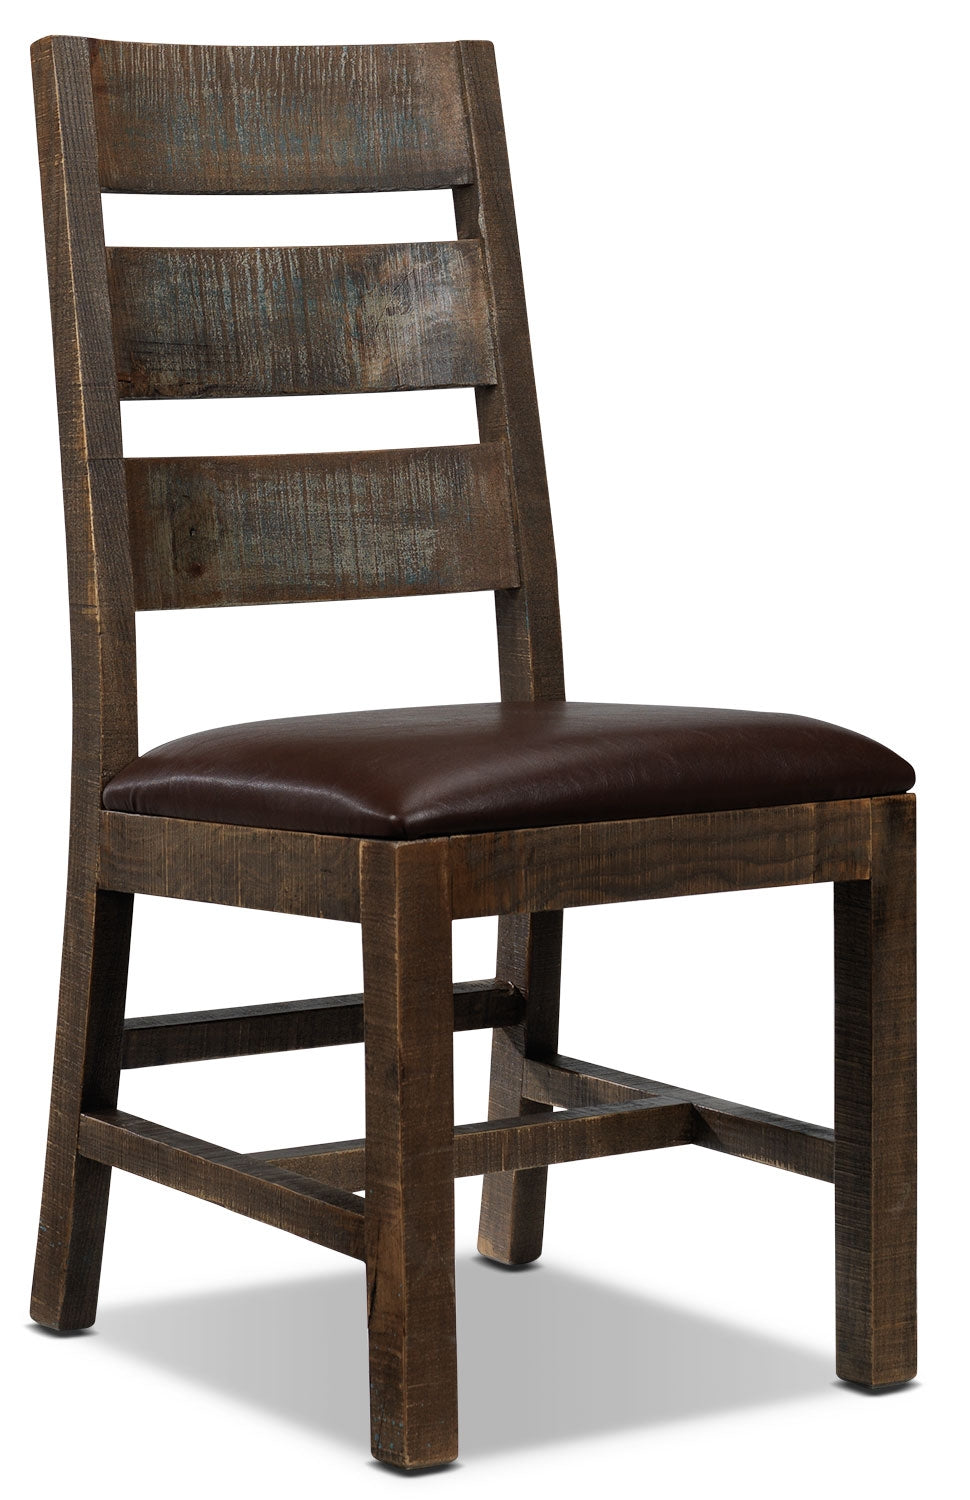 Urban Splendor Side Chair - Rustic Pine